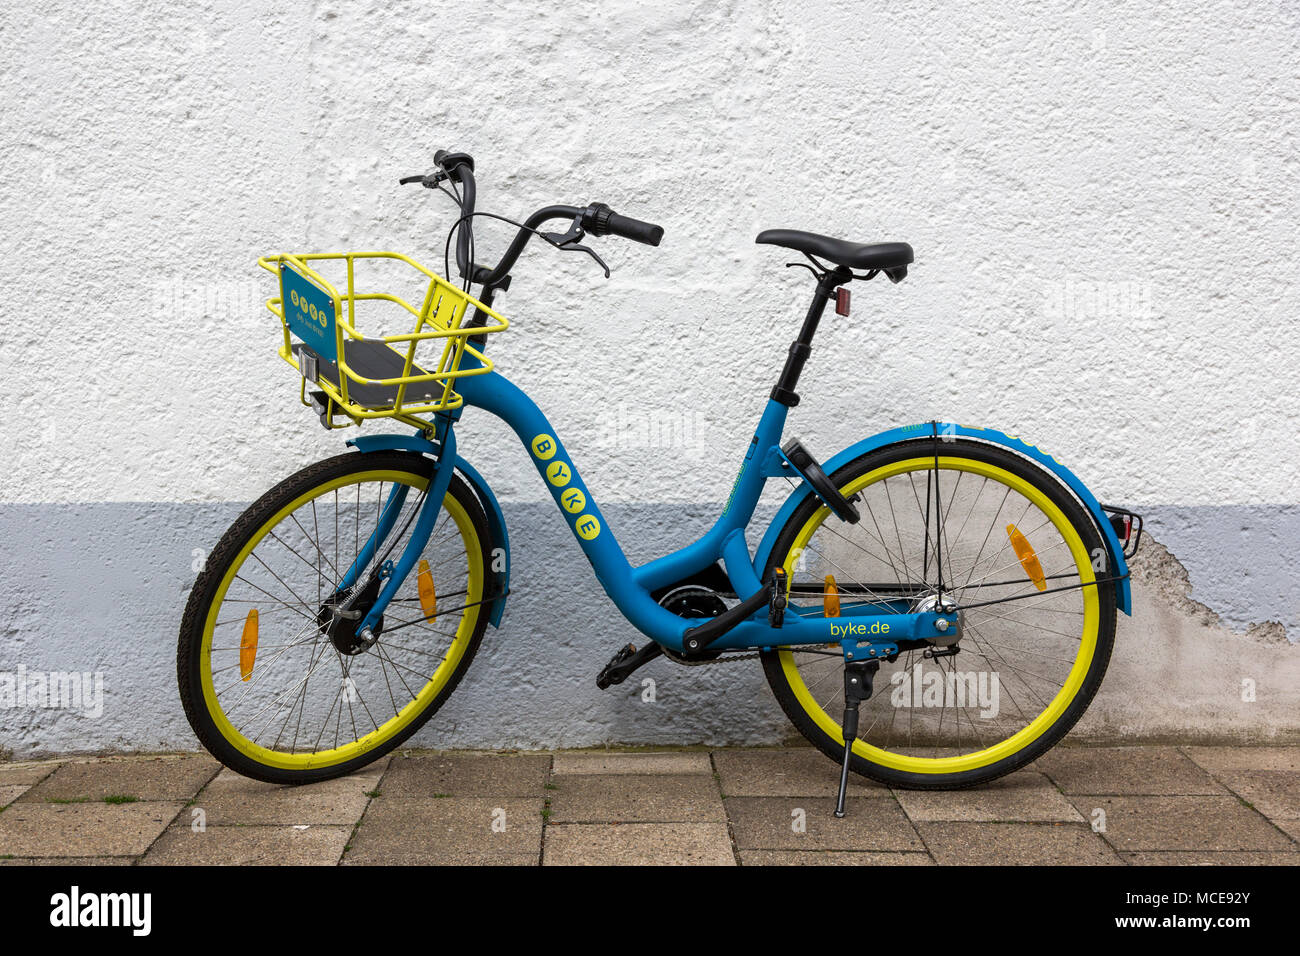 Bicycle of cycle hire scheme Byke, Mülheim an der Ruhr, Ruhr Area, North Rhine-Westphalia, Germany Stock Photo